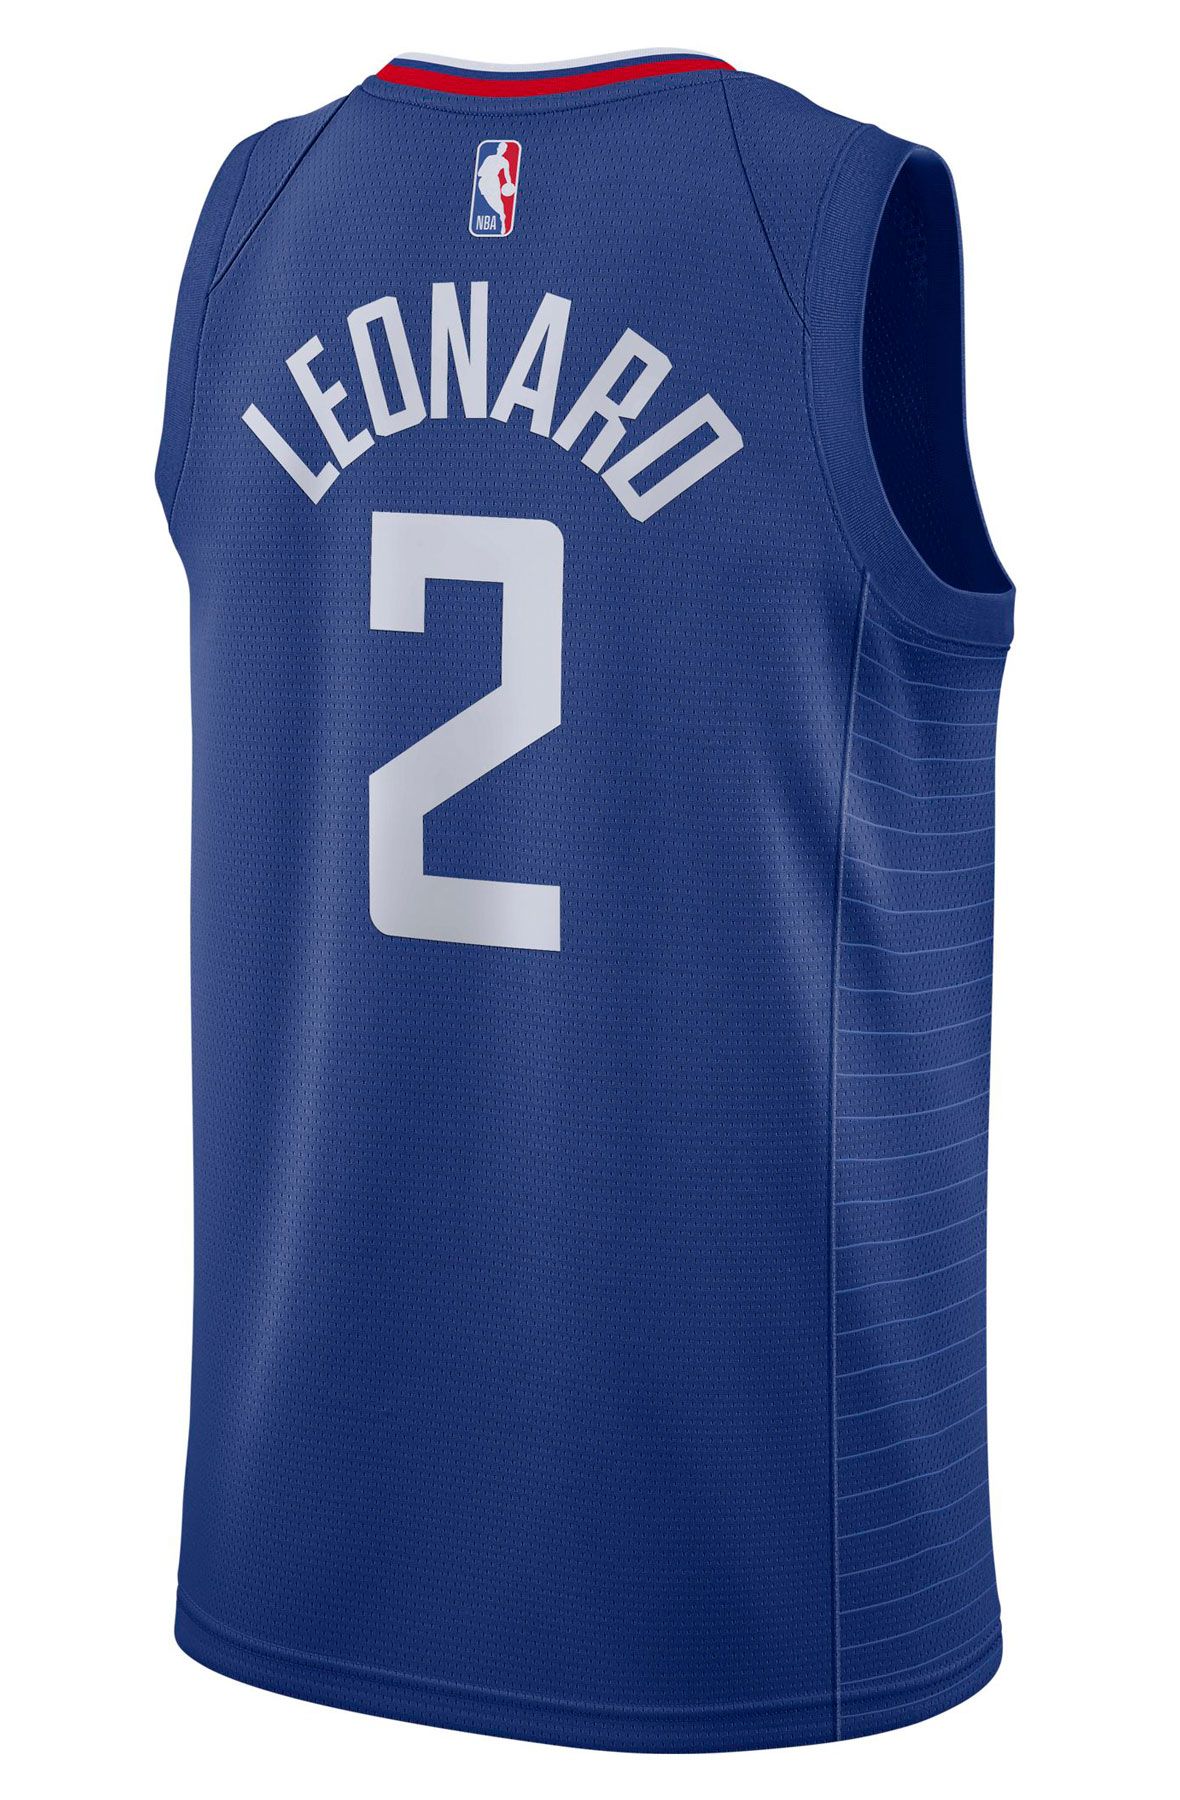 Nike, Shirts, Kawhi Leonard Clippers Jersey